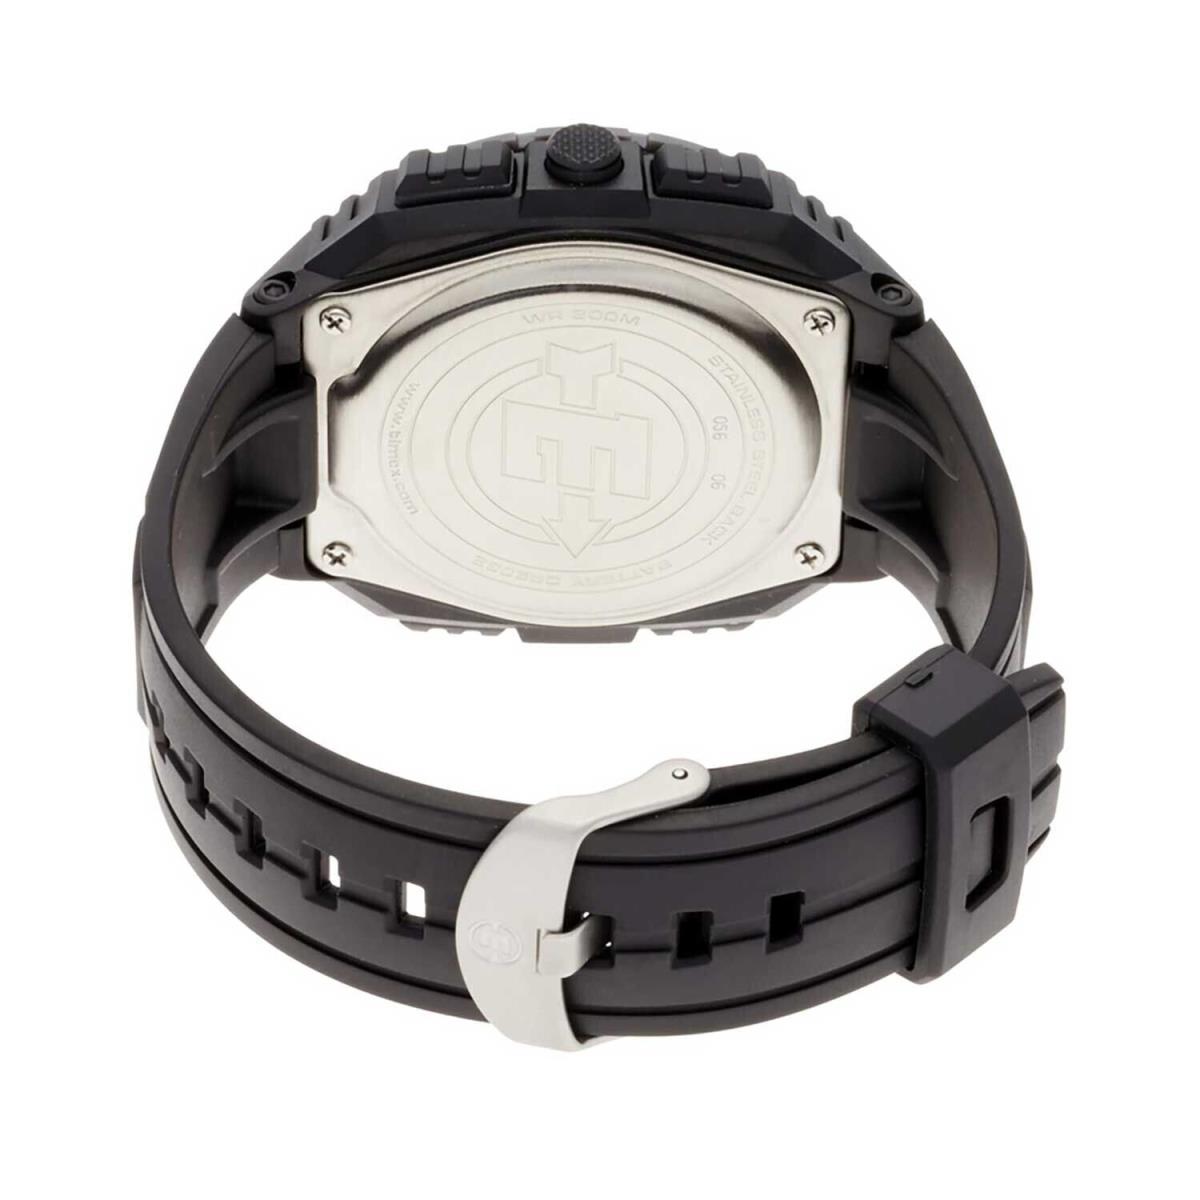 Timex T49983 Expedition Black Digital Watch Vibration Alarm